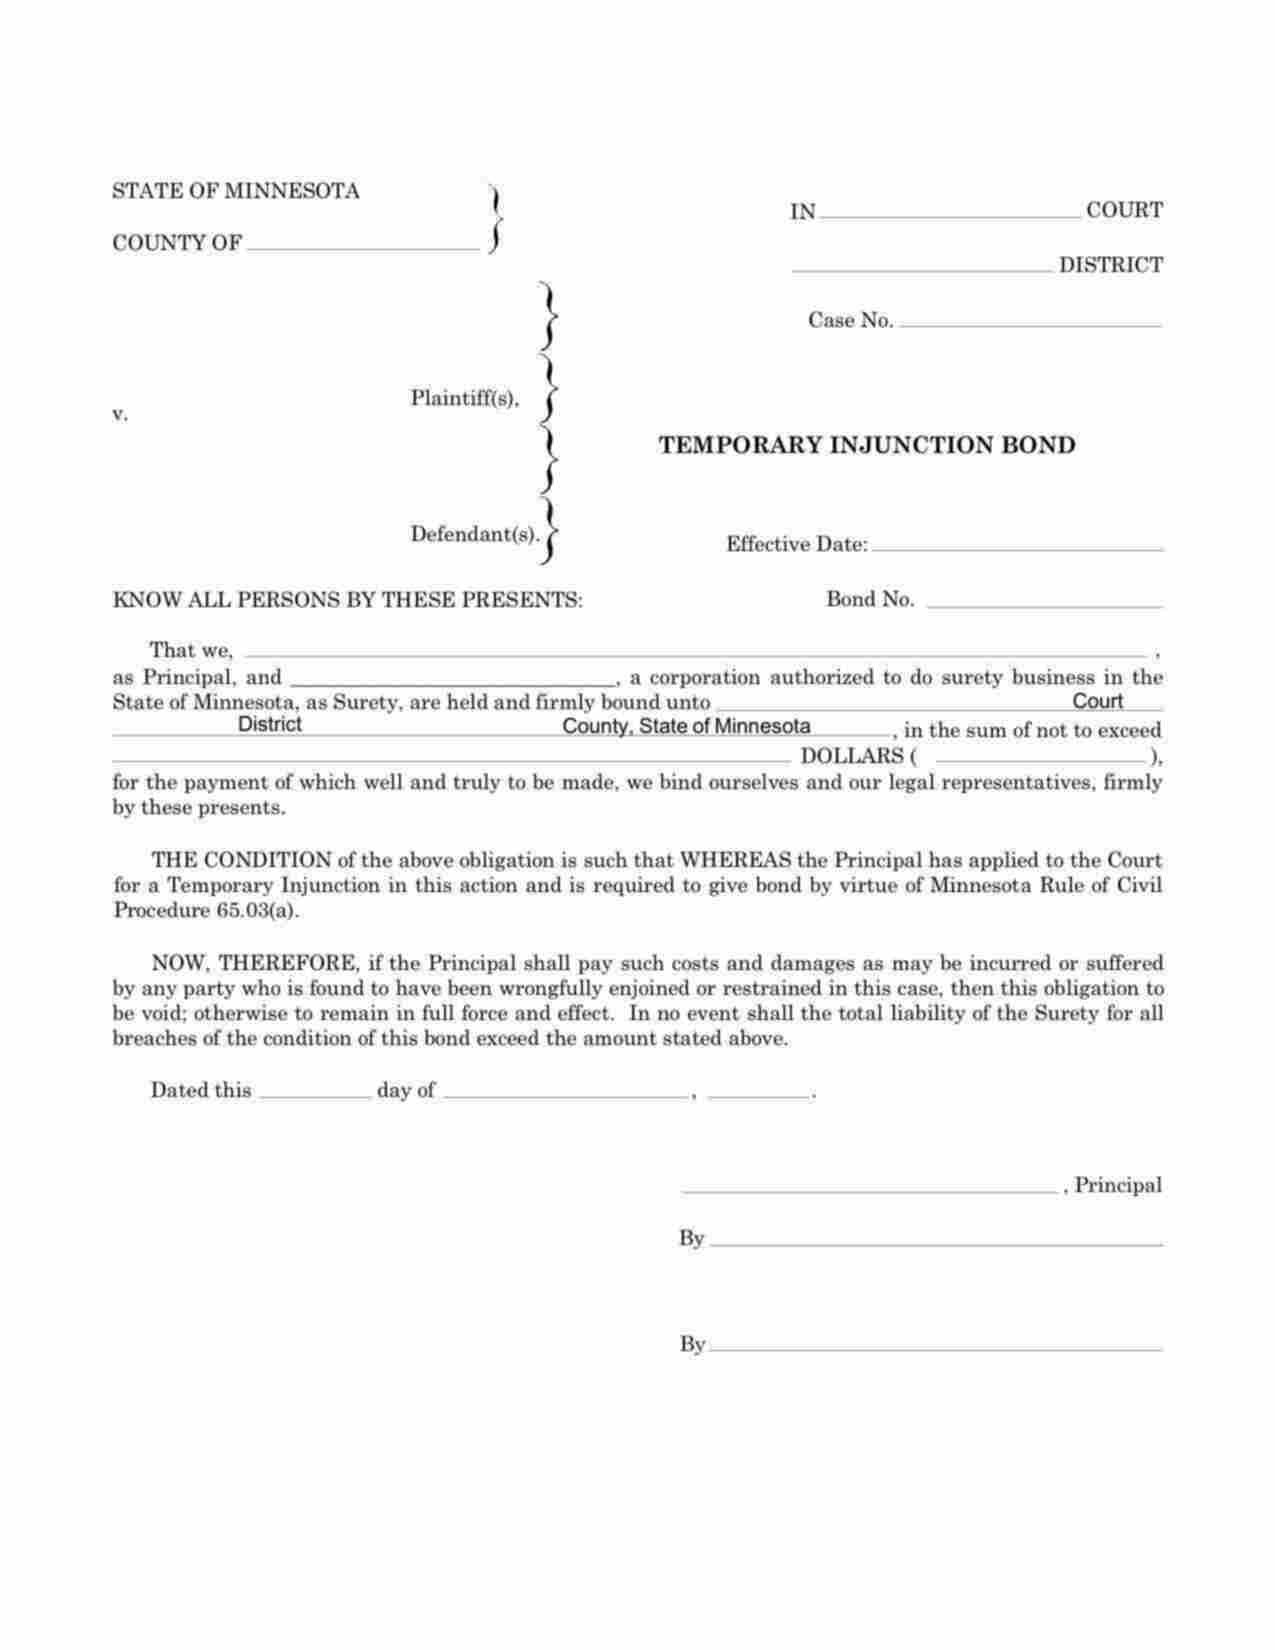 Minnesota Temporary Injunction Bond Form